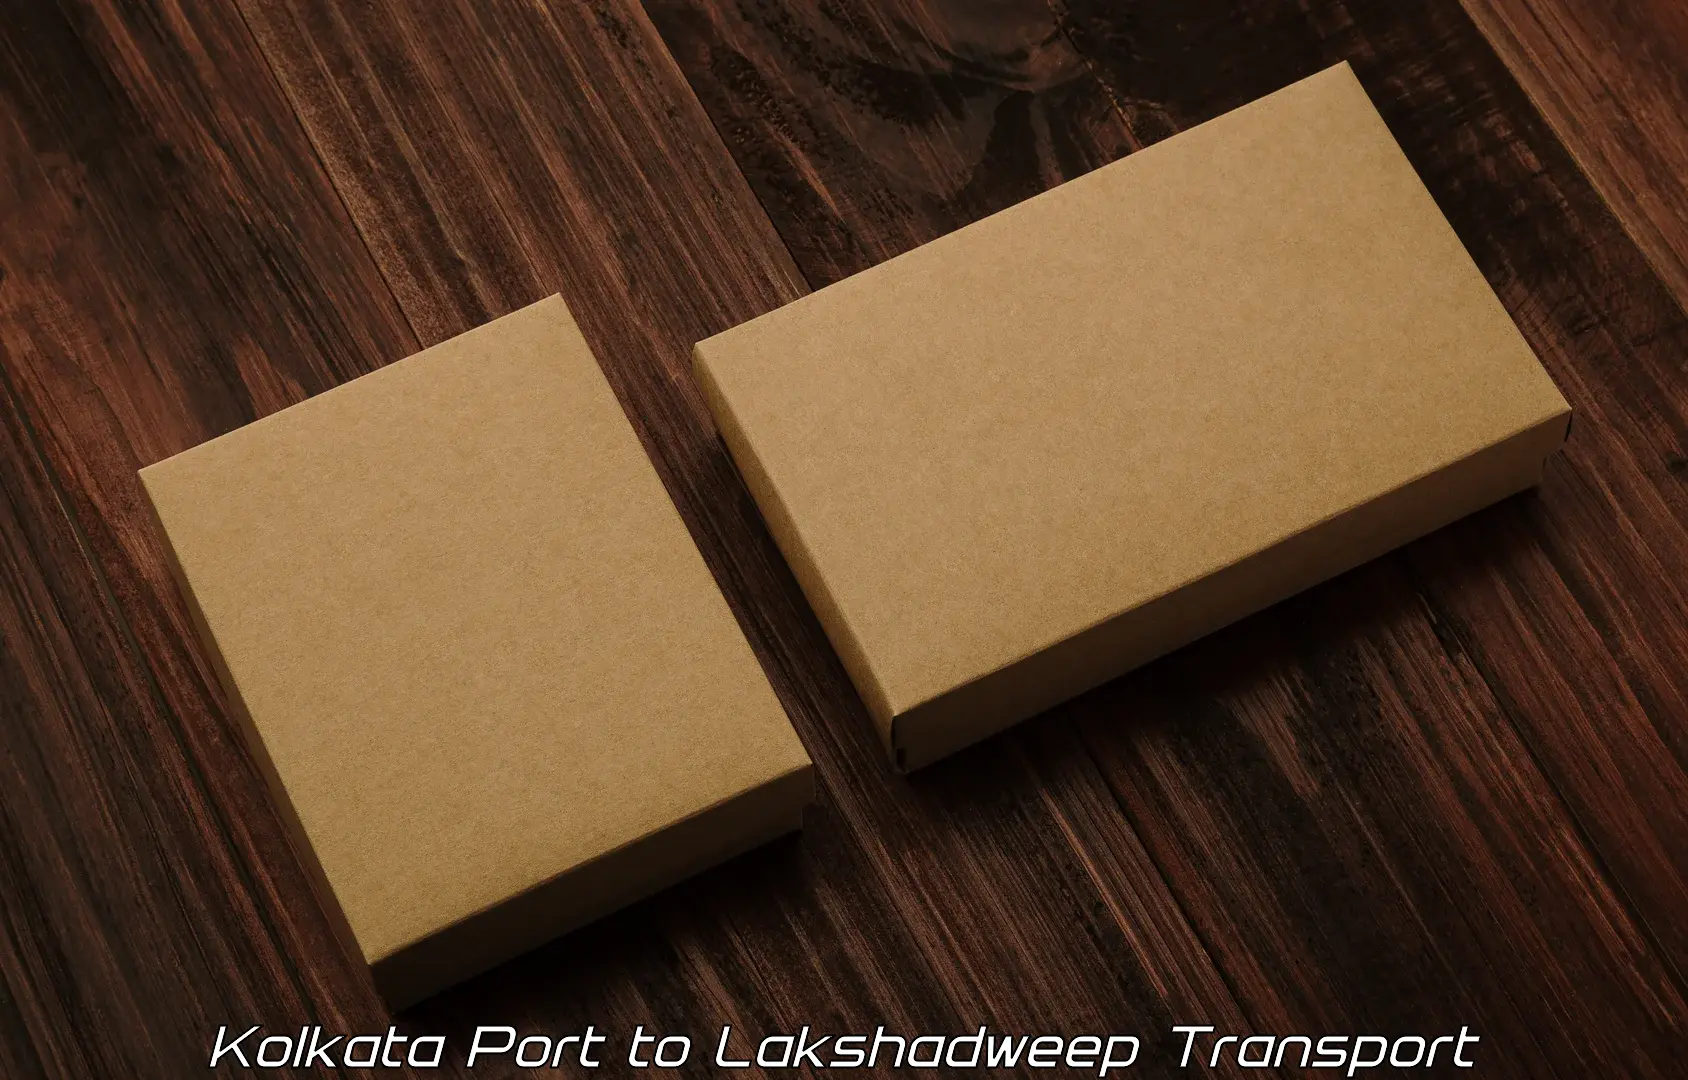 Goods delivery service Kolkata Port to Lakshadweep